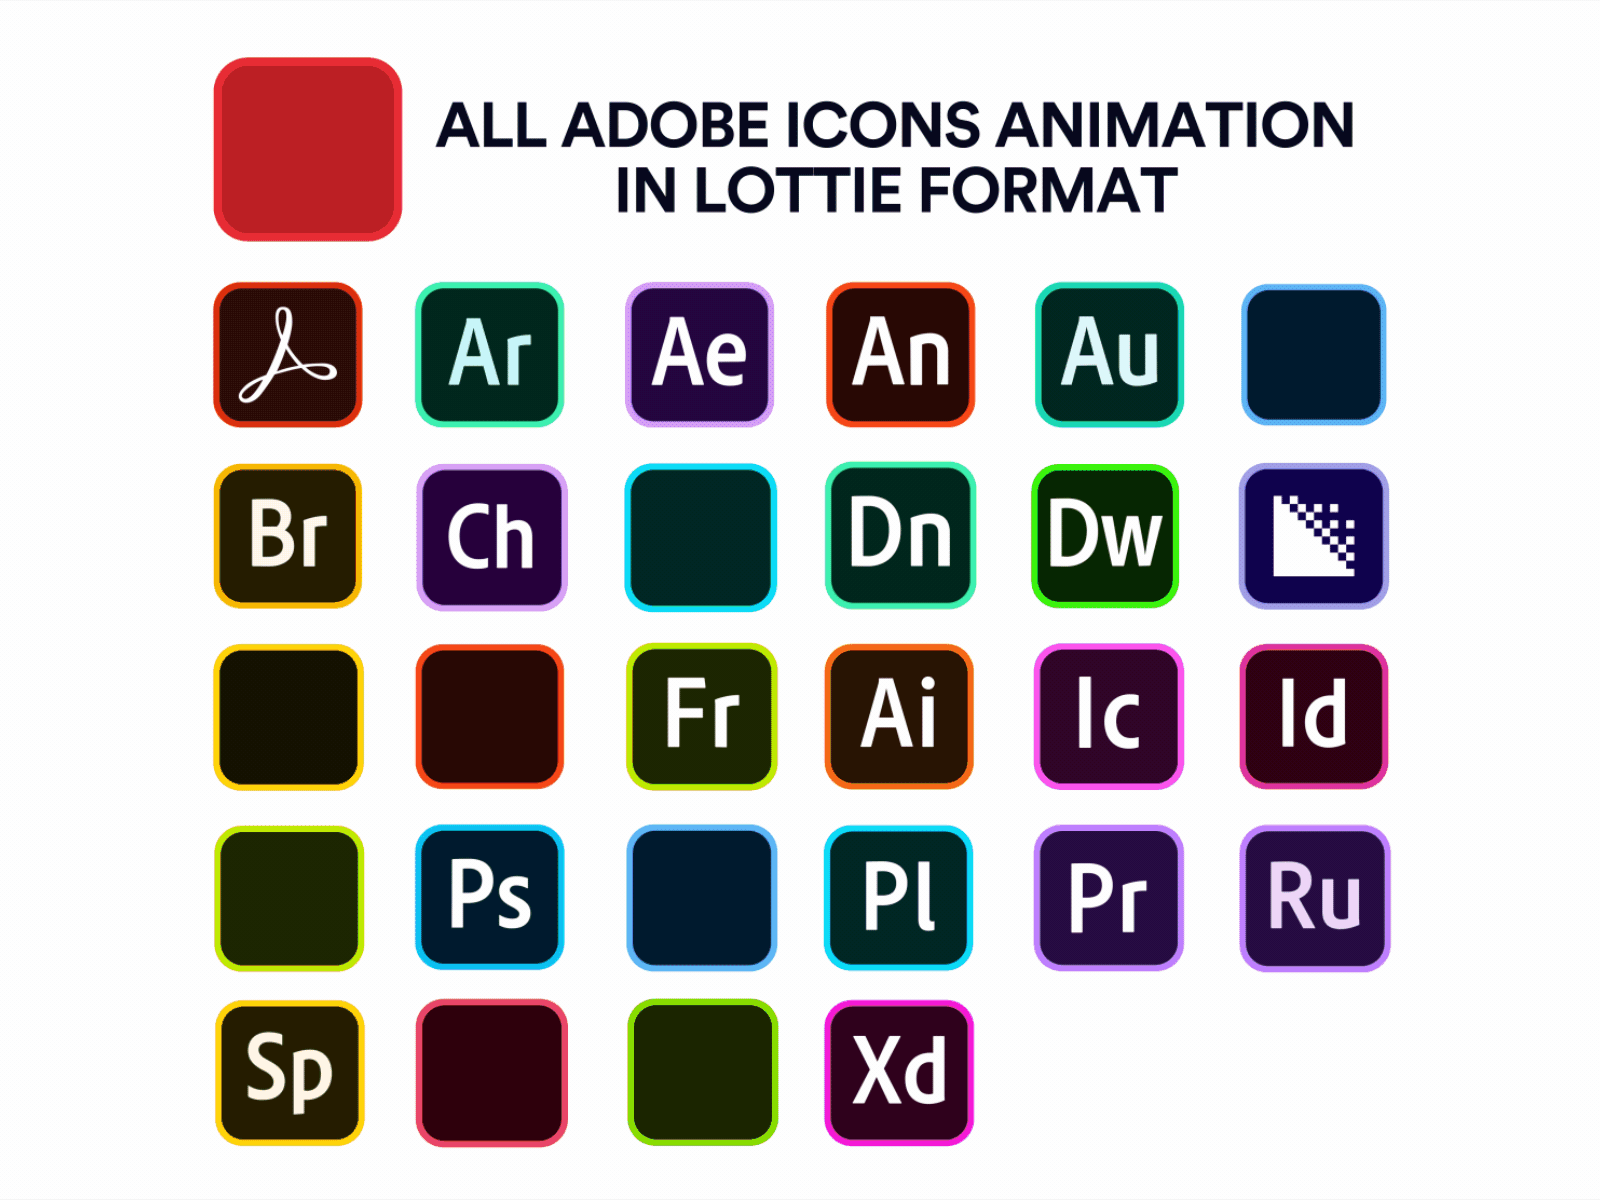 All Adobe Logos Animation Pack in Lottie JSON